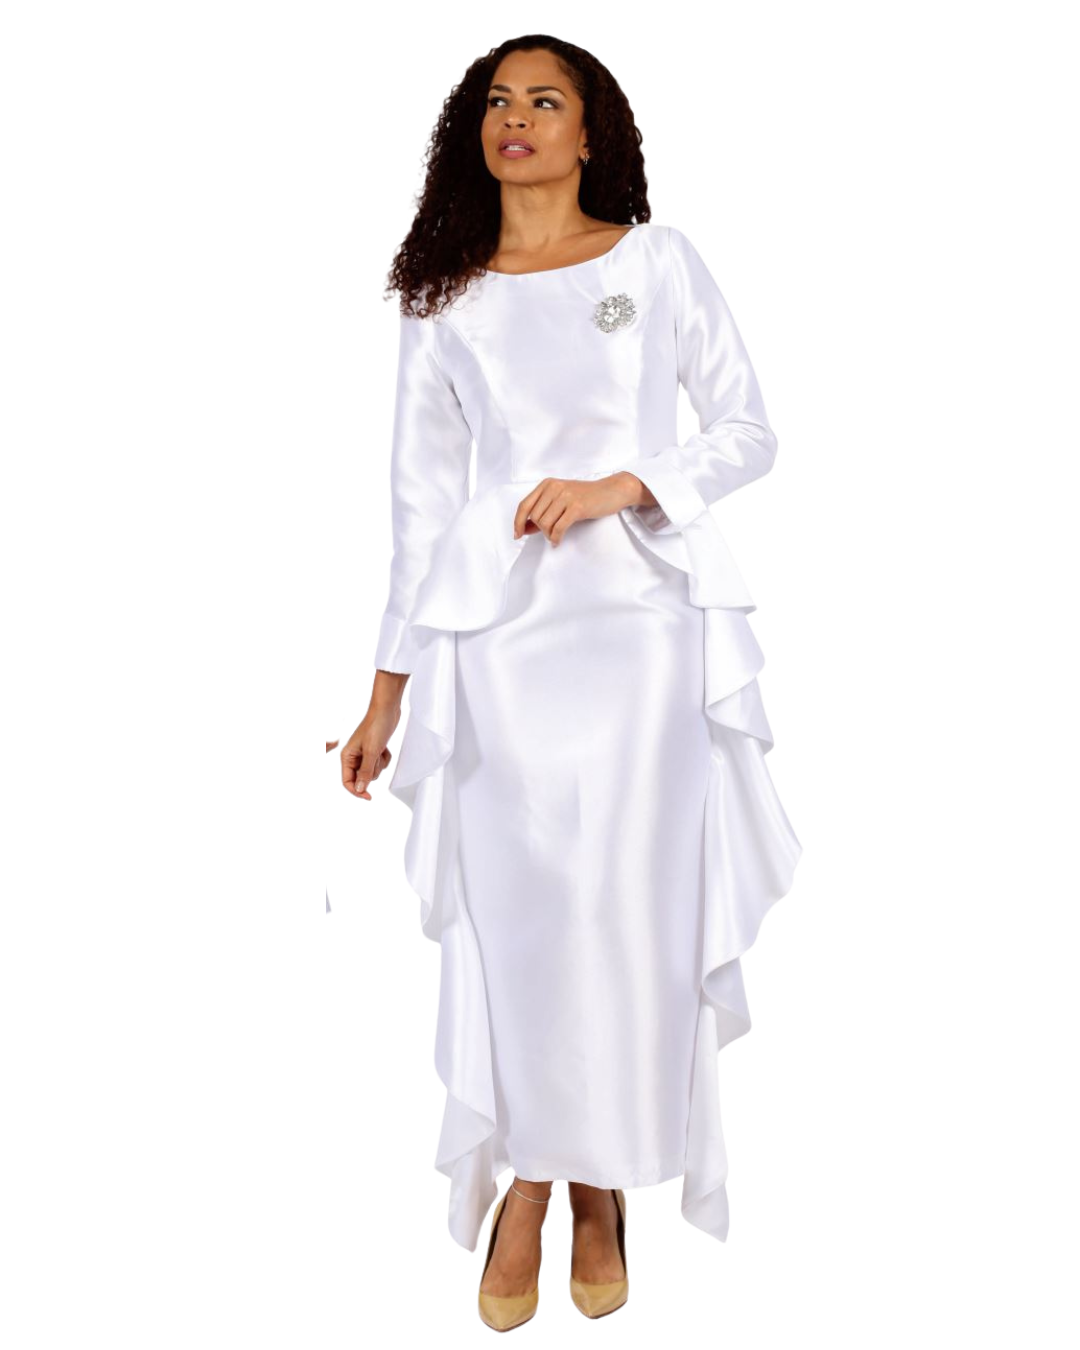 WHITE ELEGANT DRESS